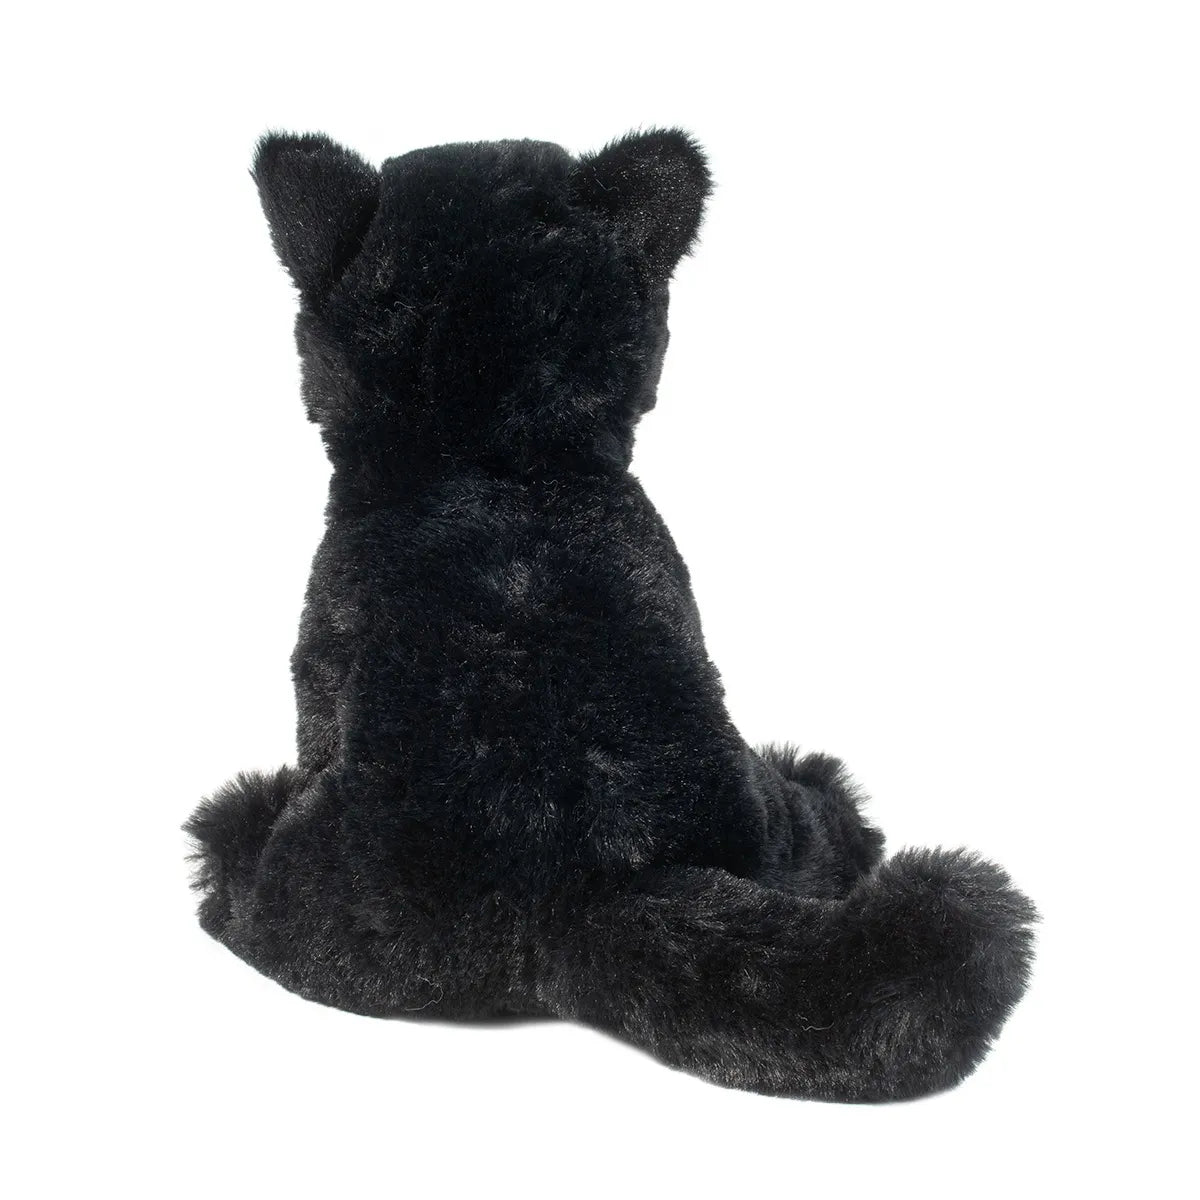 Corie Black Cat Mini Softie